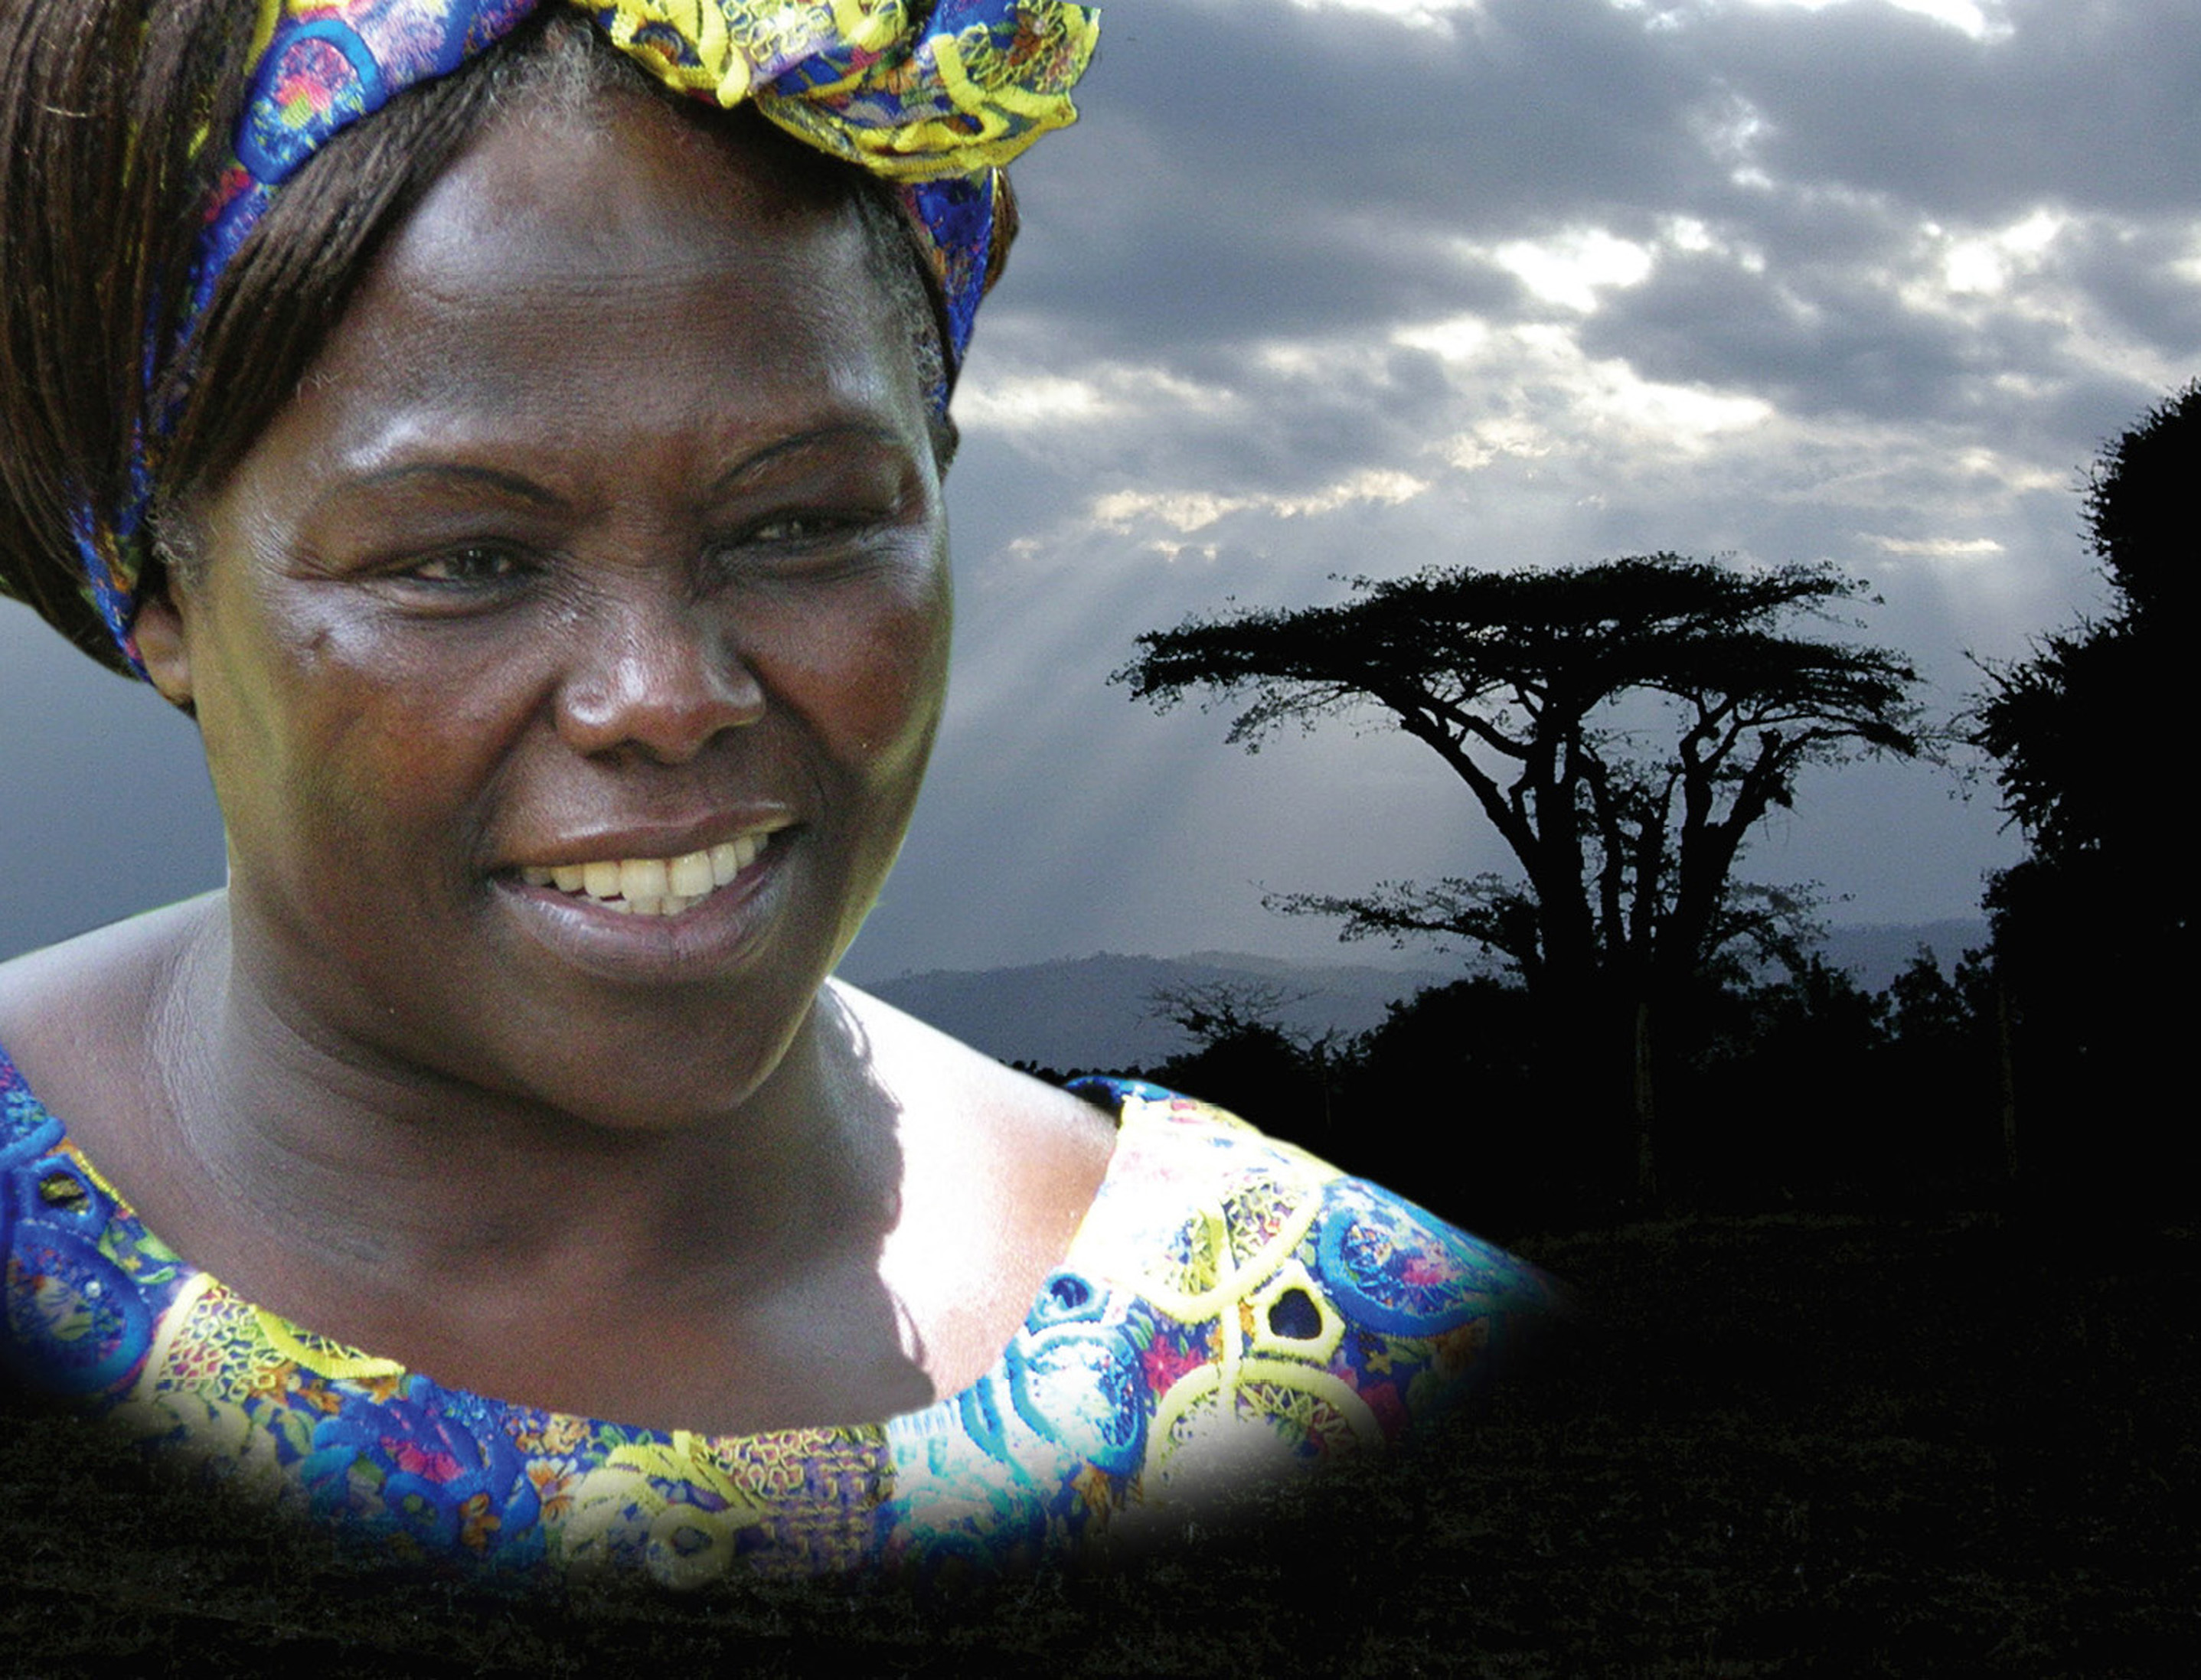 Signature image Wangari 600dpi.jpg